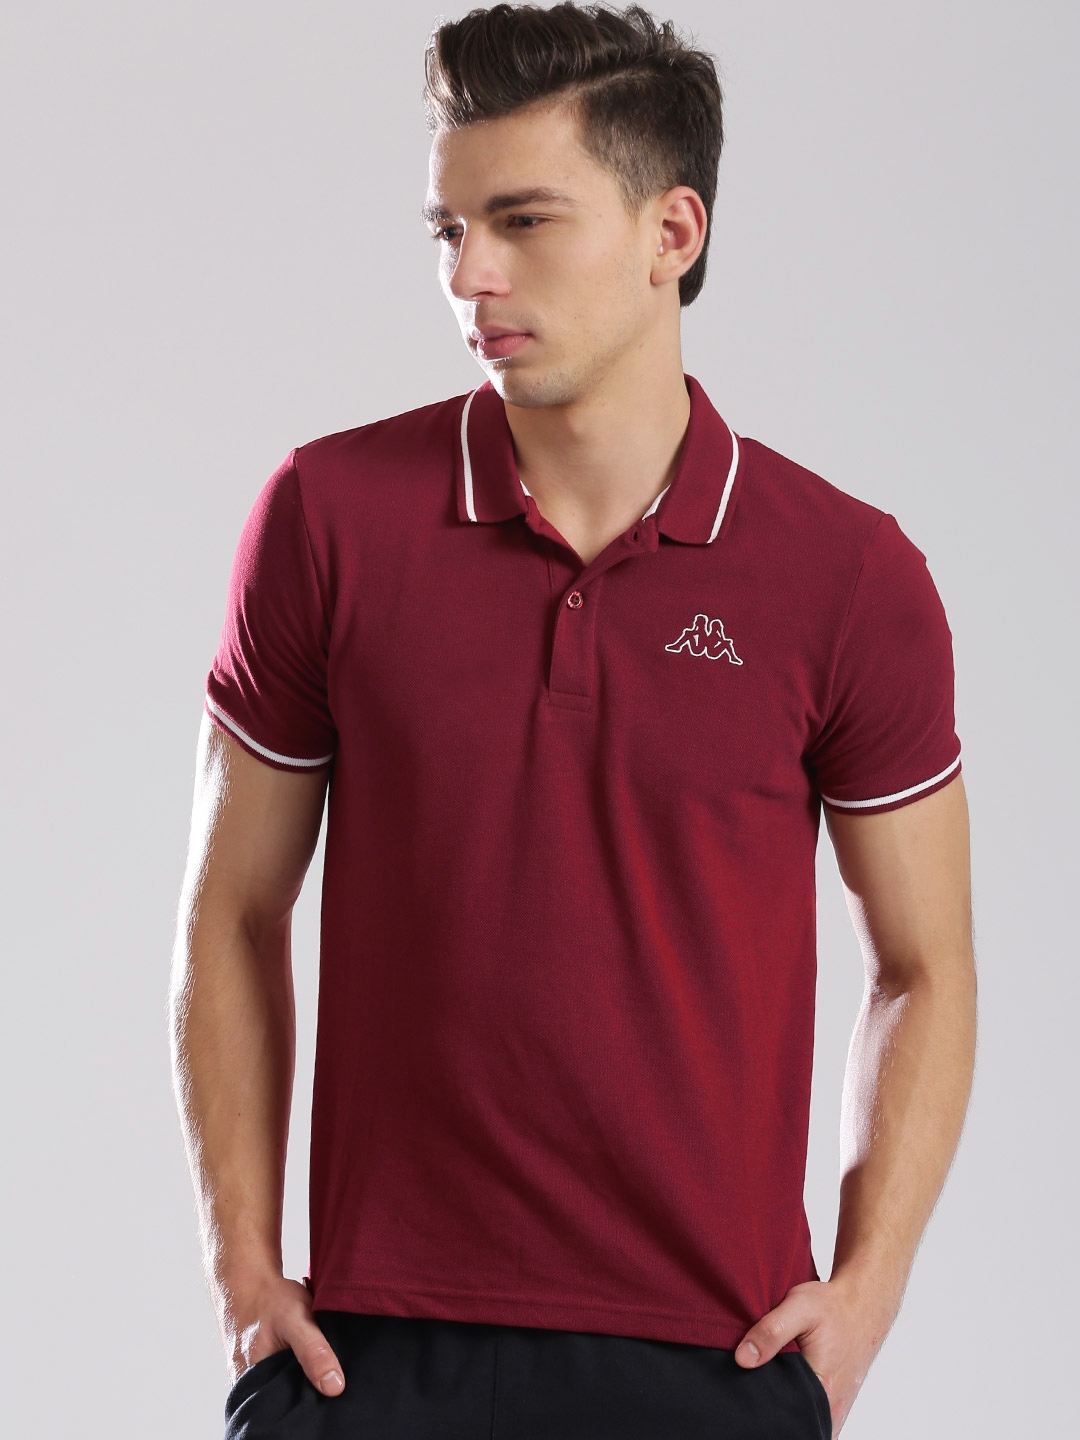 defect Power Revival Buy Kappa Maroon Polo T Shirt - Tshirts for Men 1122487 | Myntra